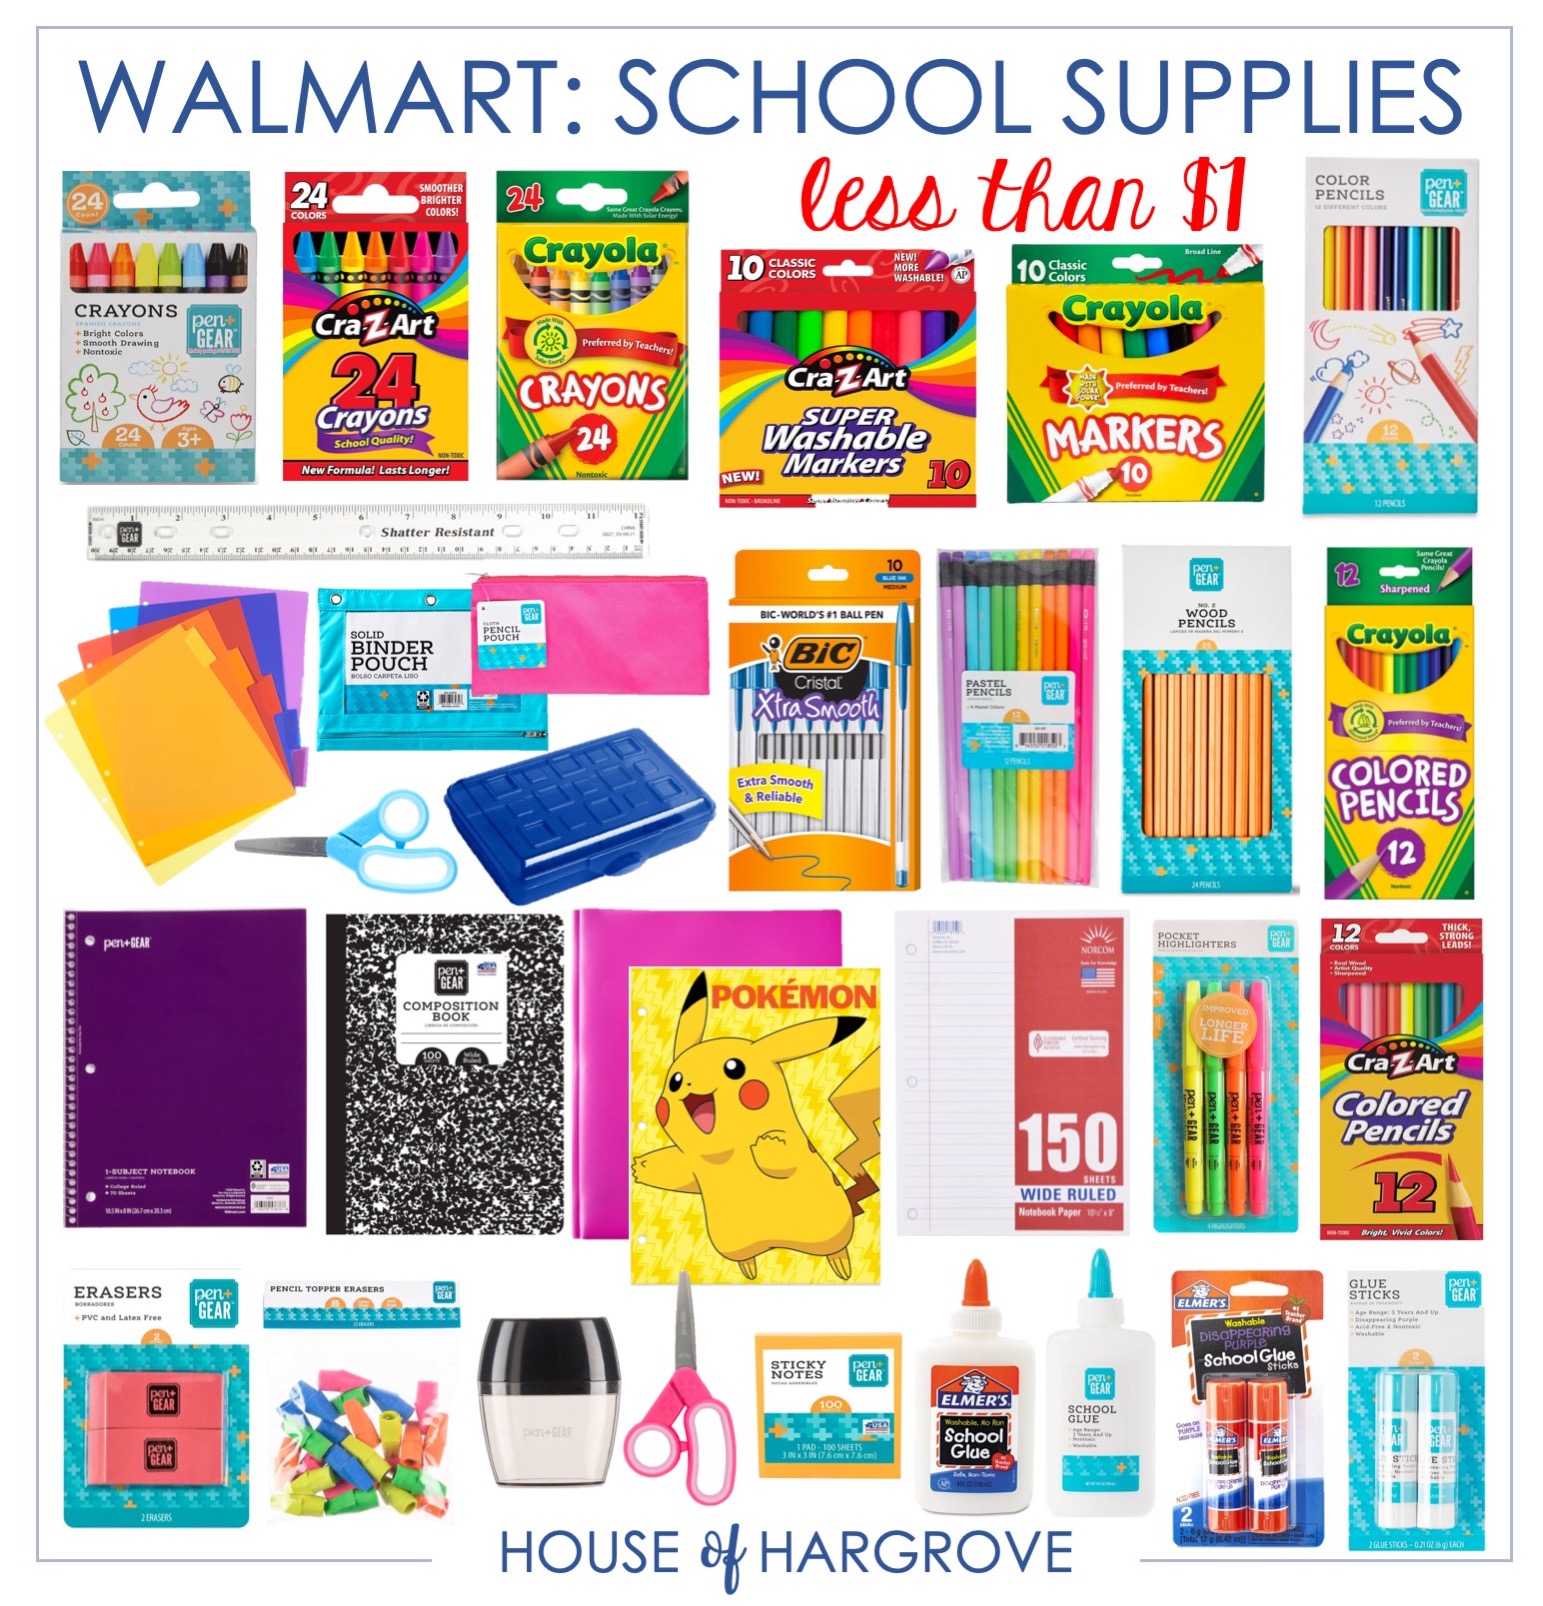 DEAL ALERT: Walmart School Supplies Under $1 - House of Hargrove